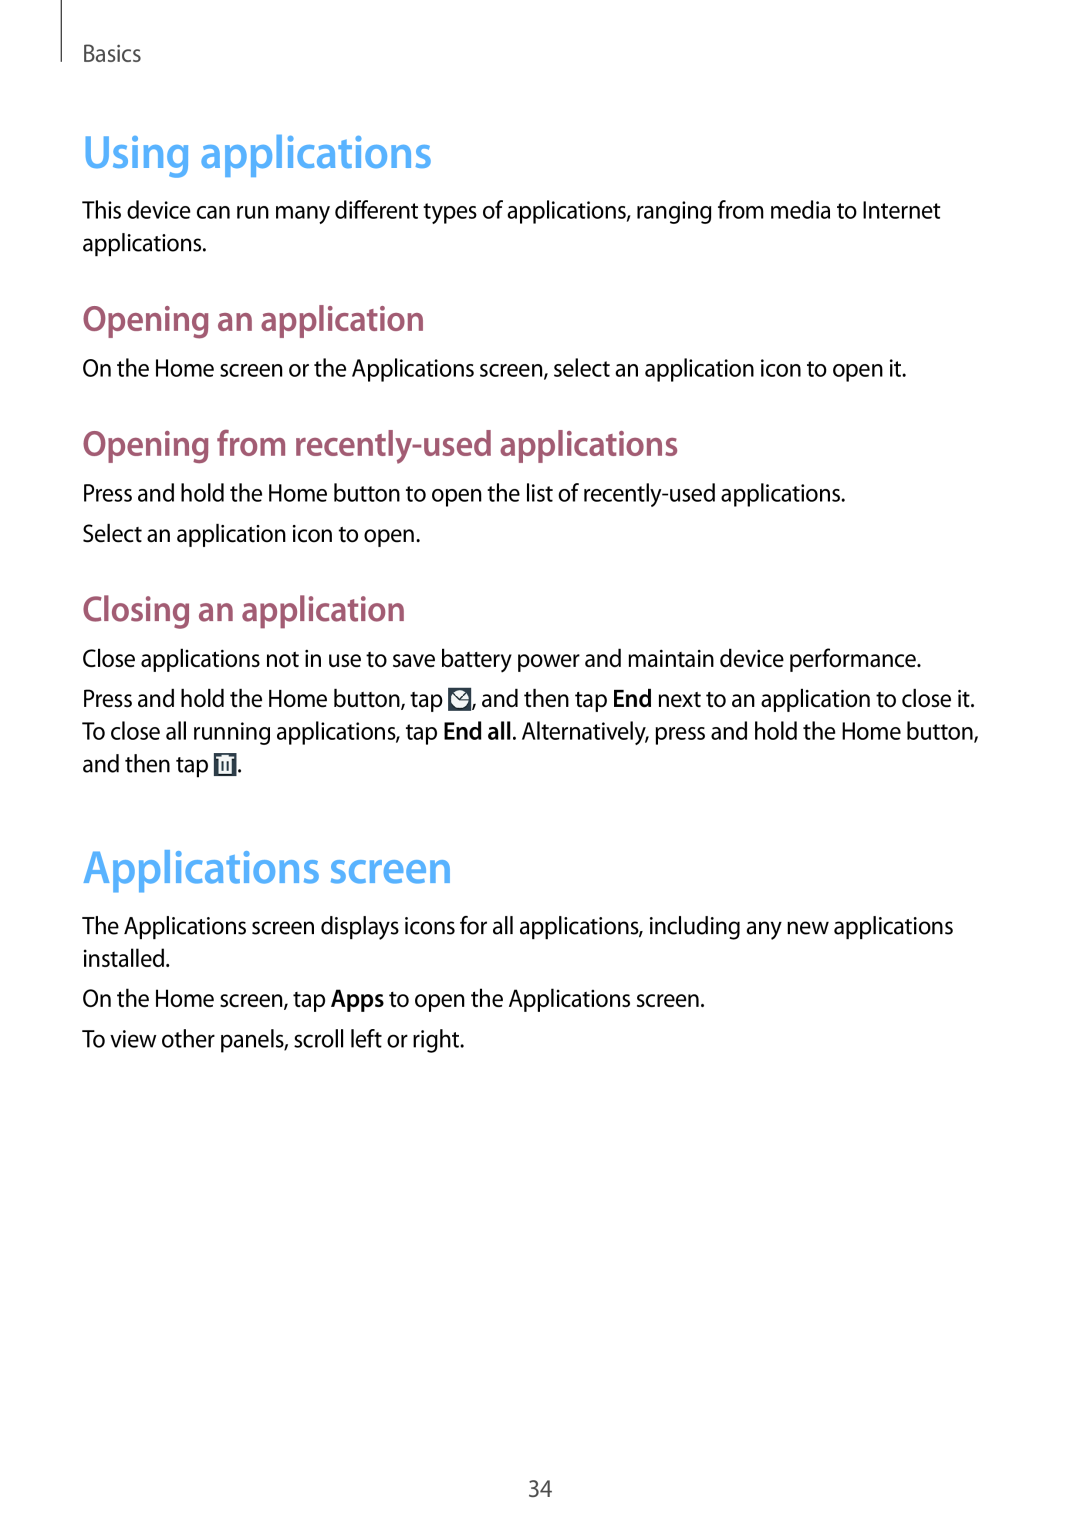 Samsung GT-I8190ZWWVDC Using applications, Applications screen, Opening an application, Closing an application, Basics 